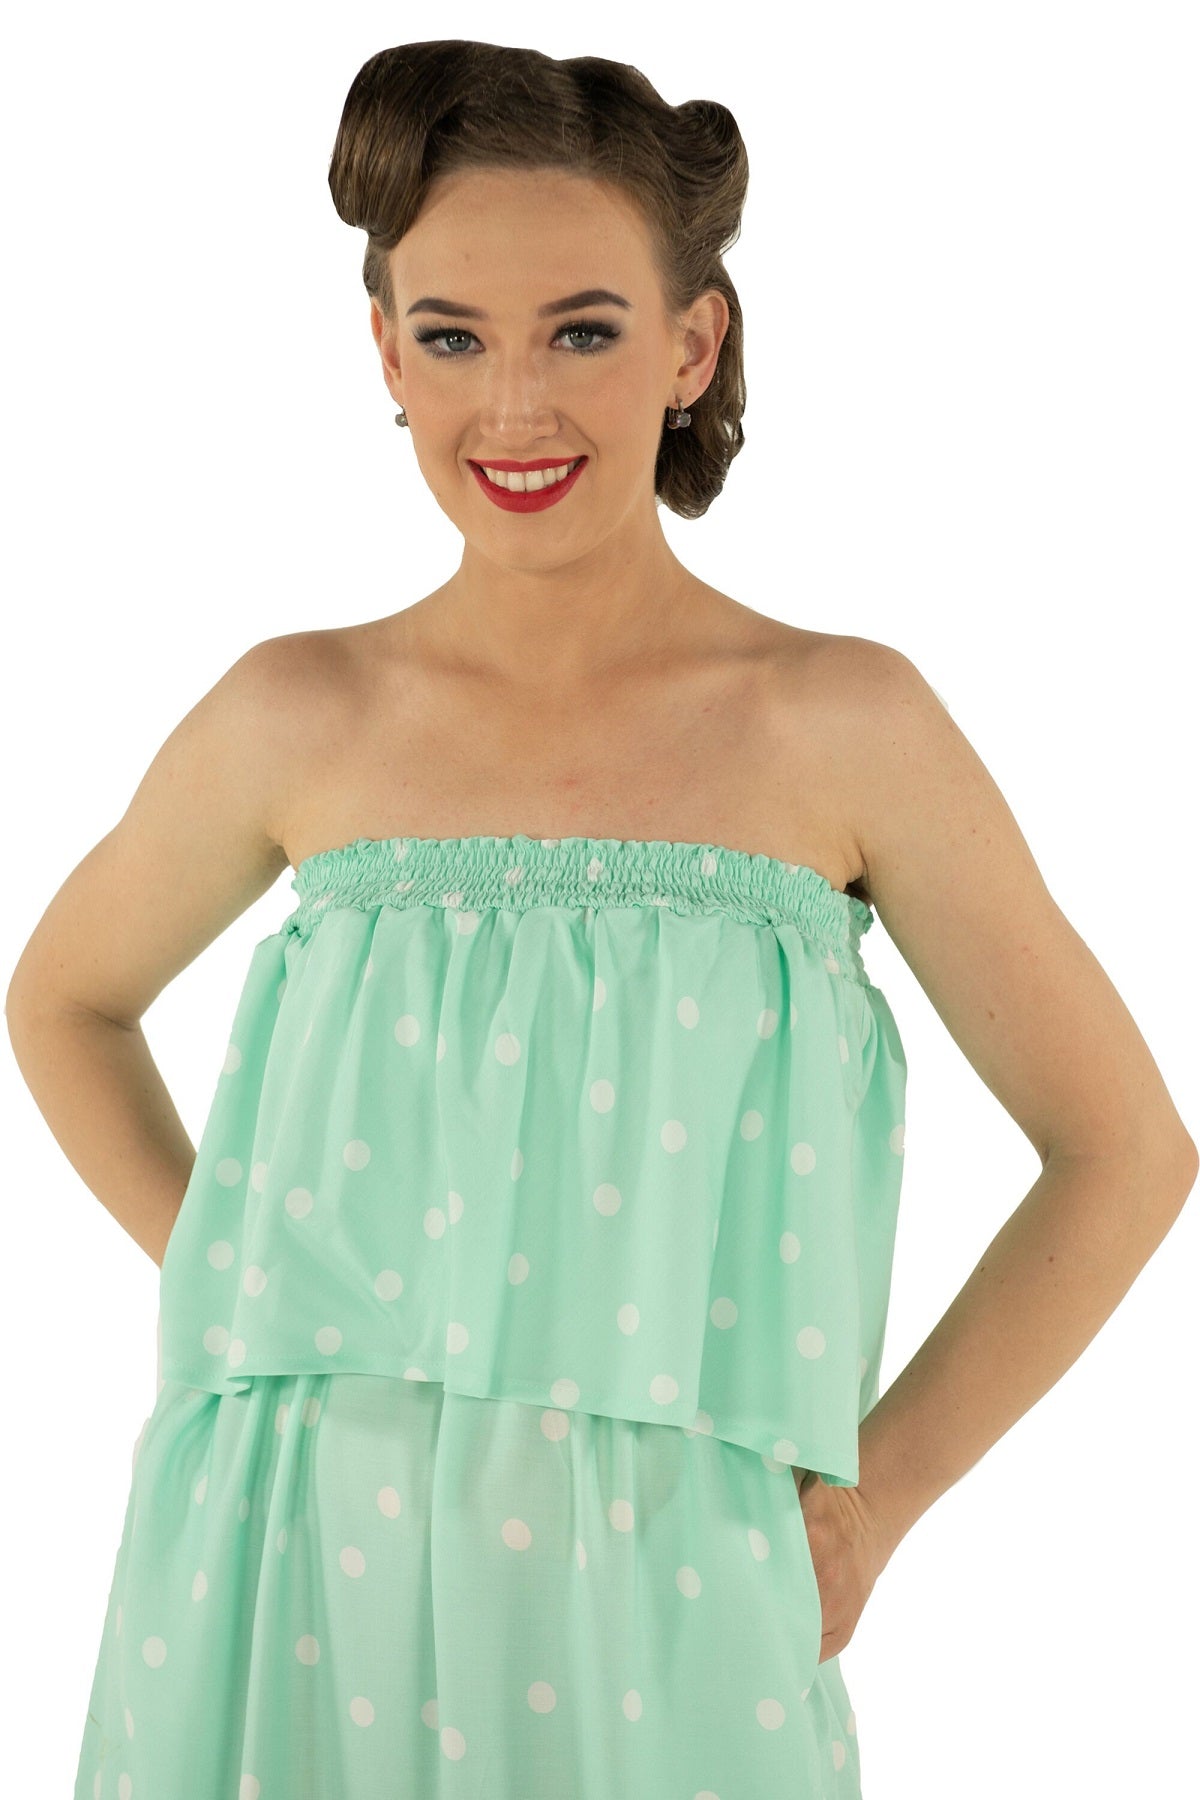  Multi Wear Bandeau & Off-On the Shoulder Dress Mint Polka